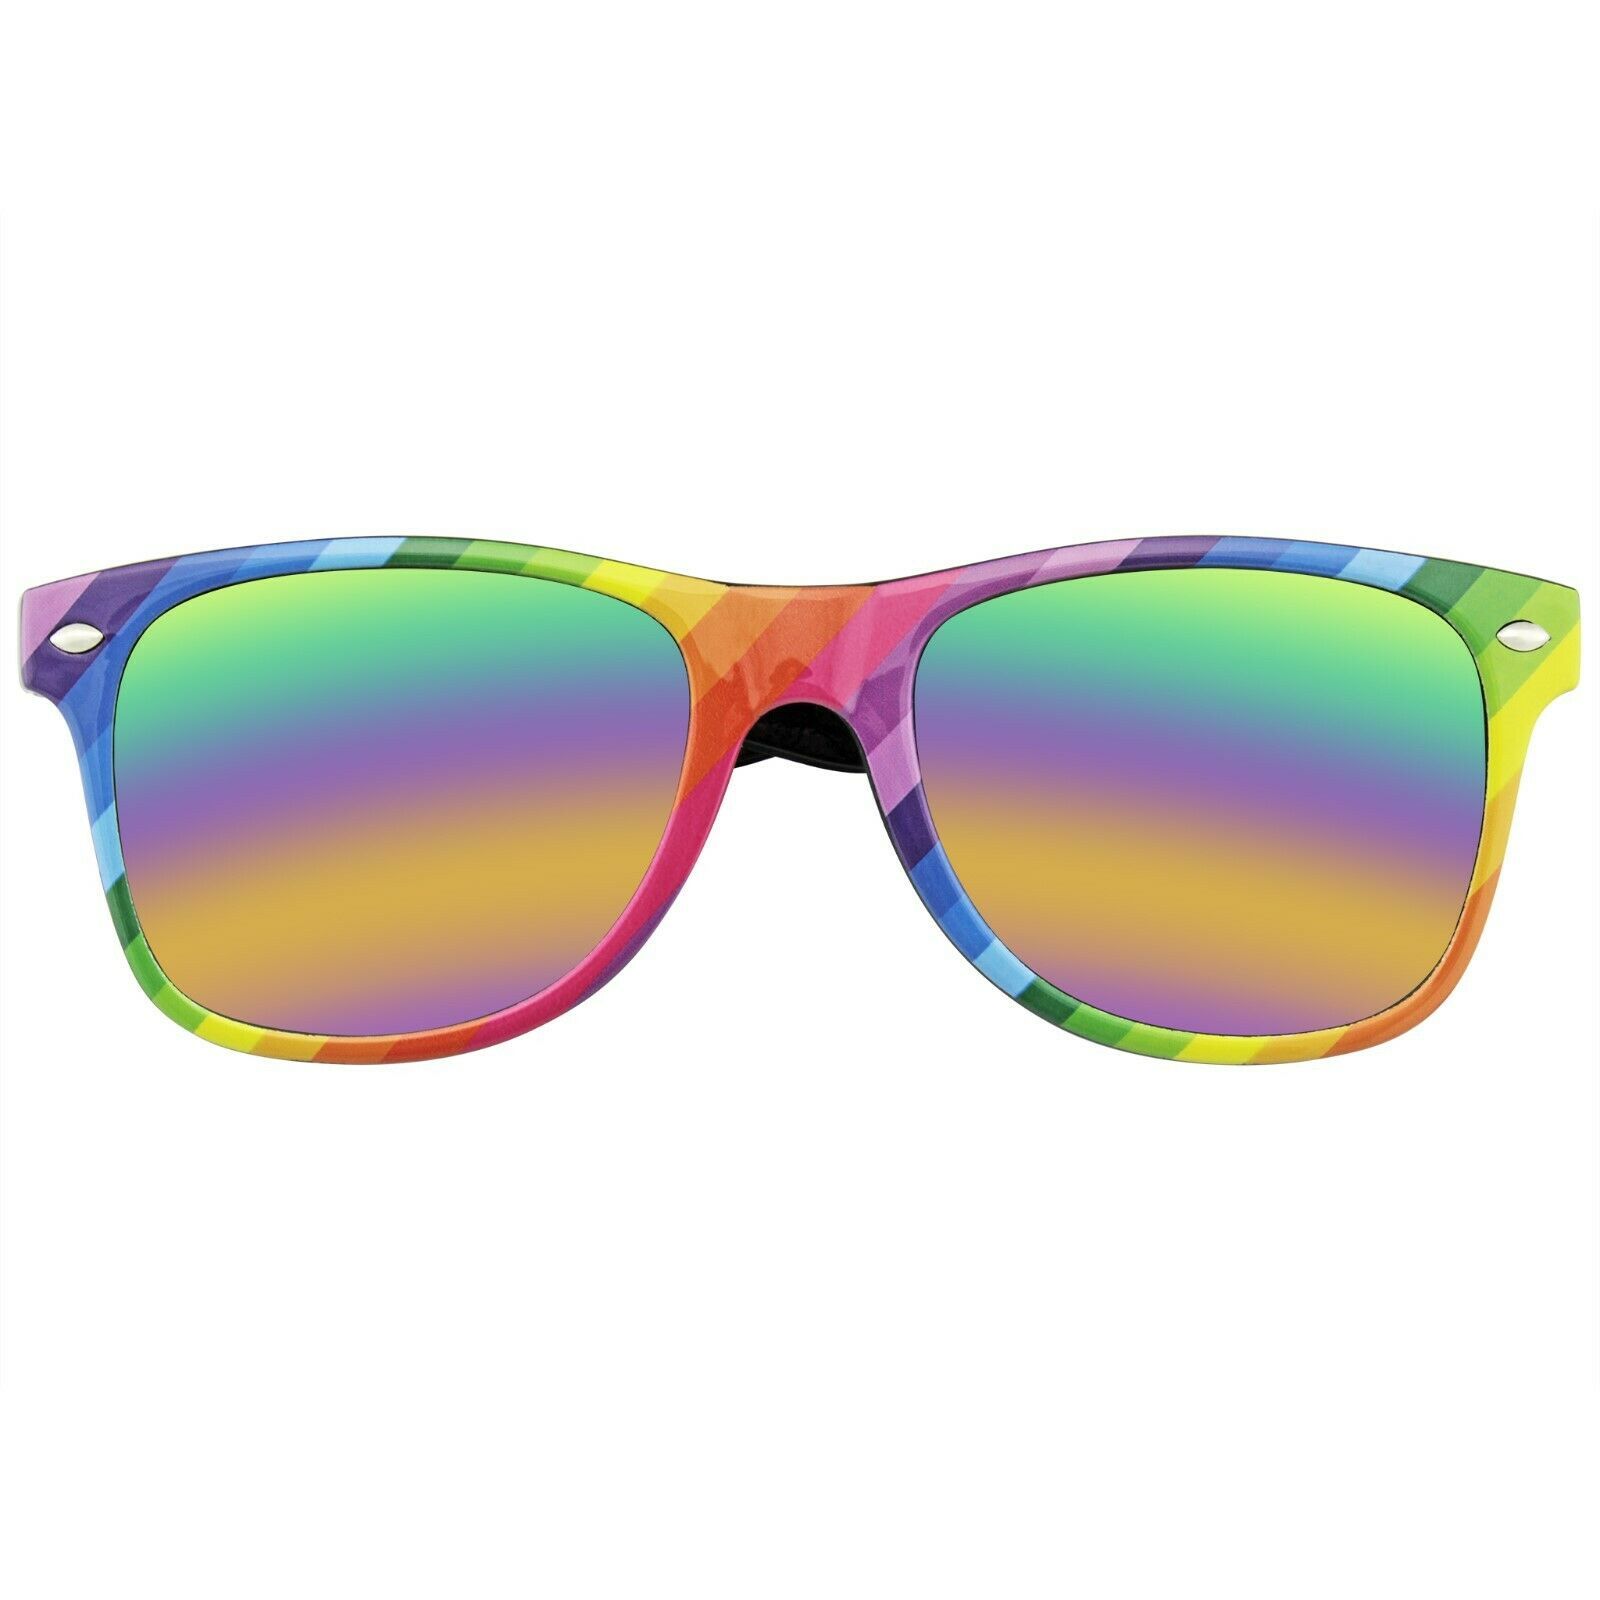 Sunglasses Mens Womens Retro 80s Party Festival Rainbow Mirrored Sunglasses Case Sunglasses 